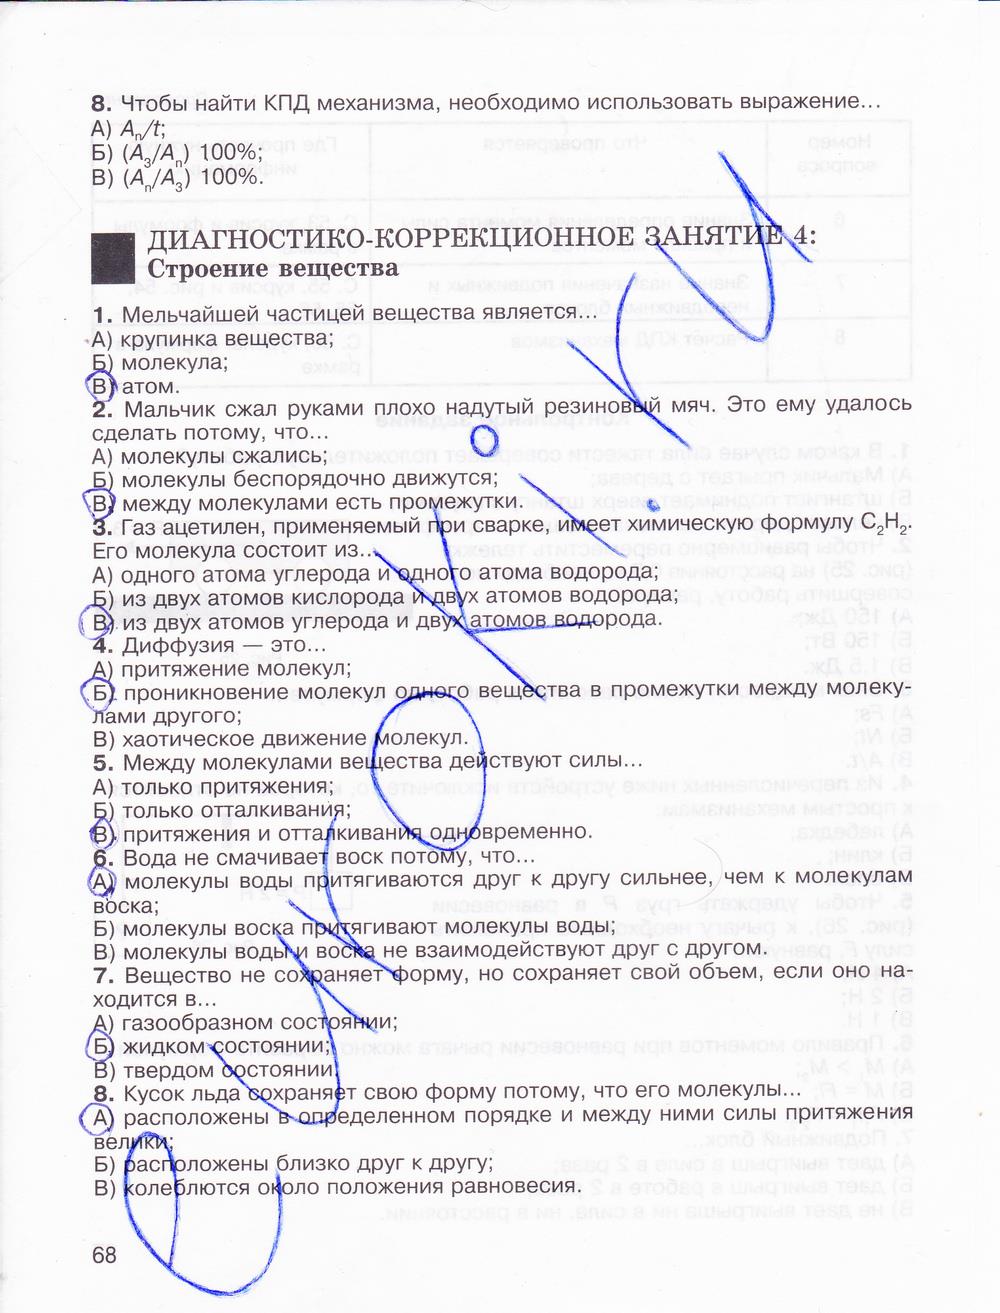 гдз 7 класс рабочая тетрадь страница 68 физика Мартынова, Бовин, Коротаев